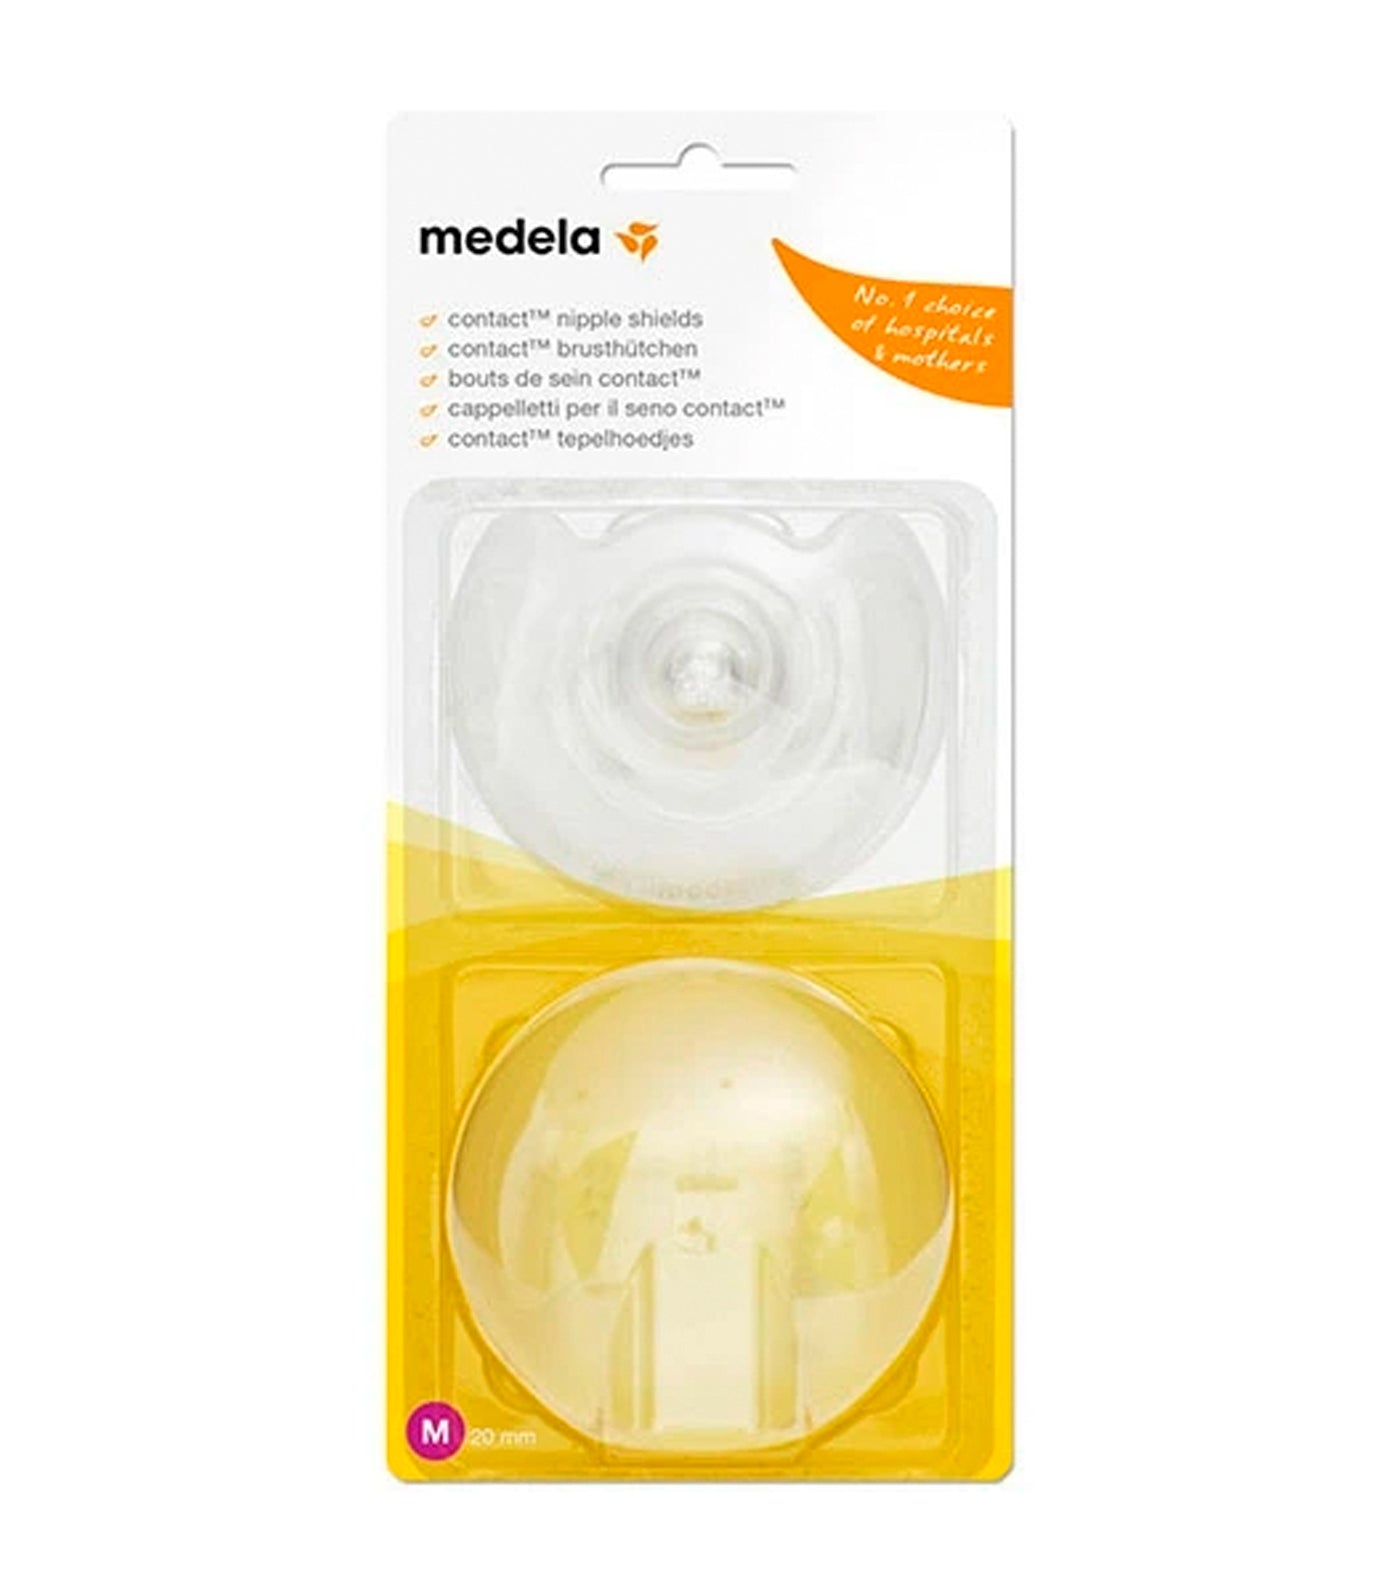 Medium Nipple Shields 21mm